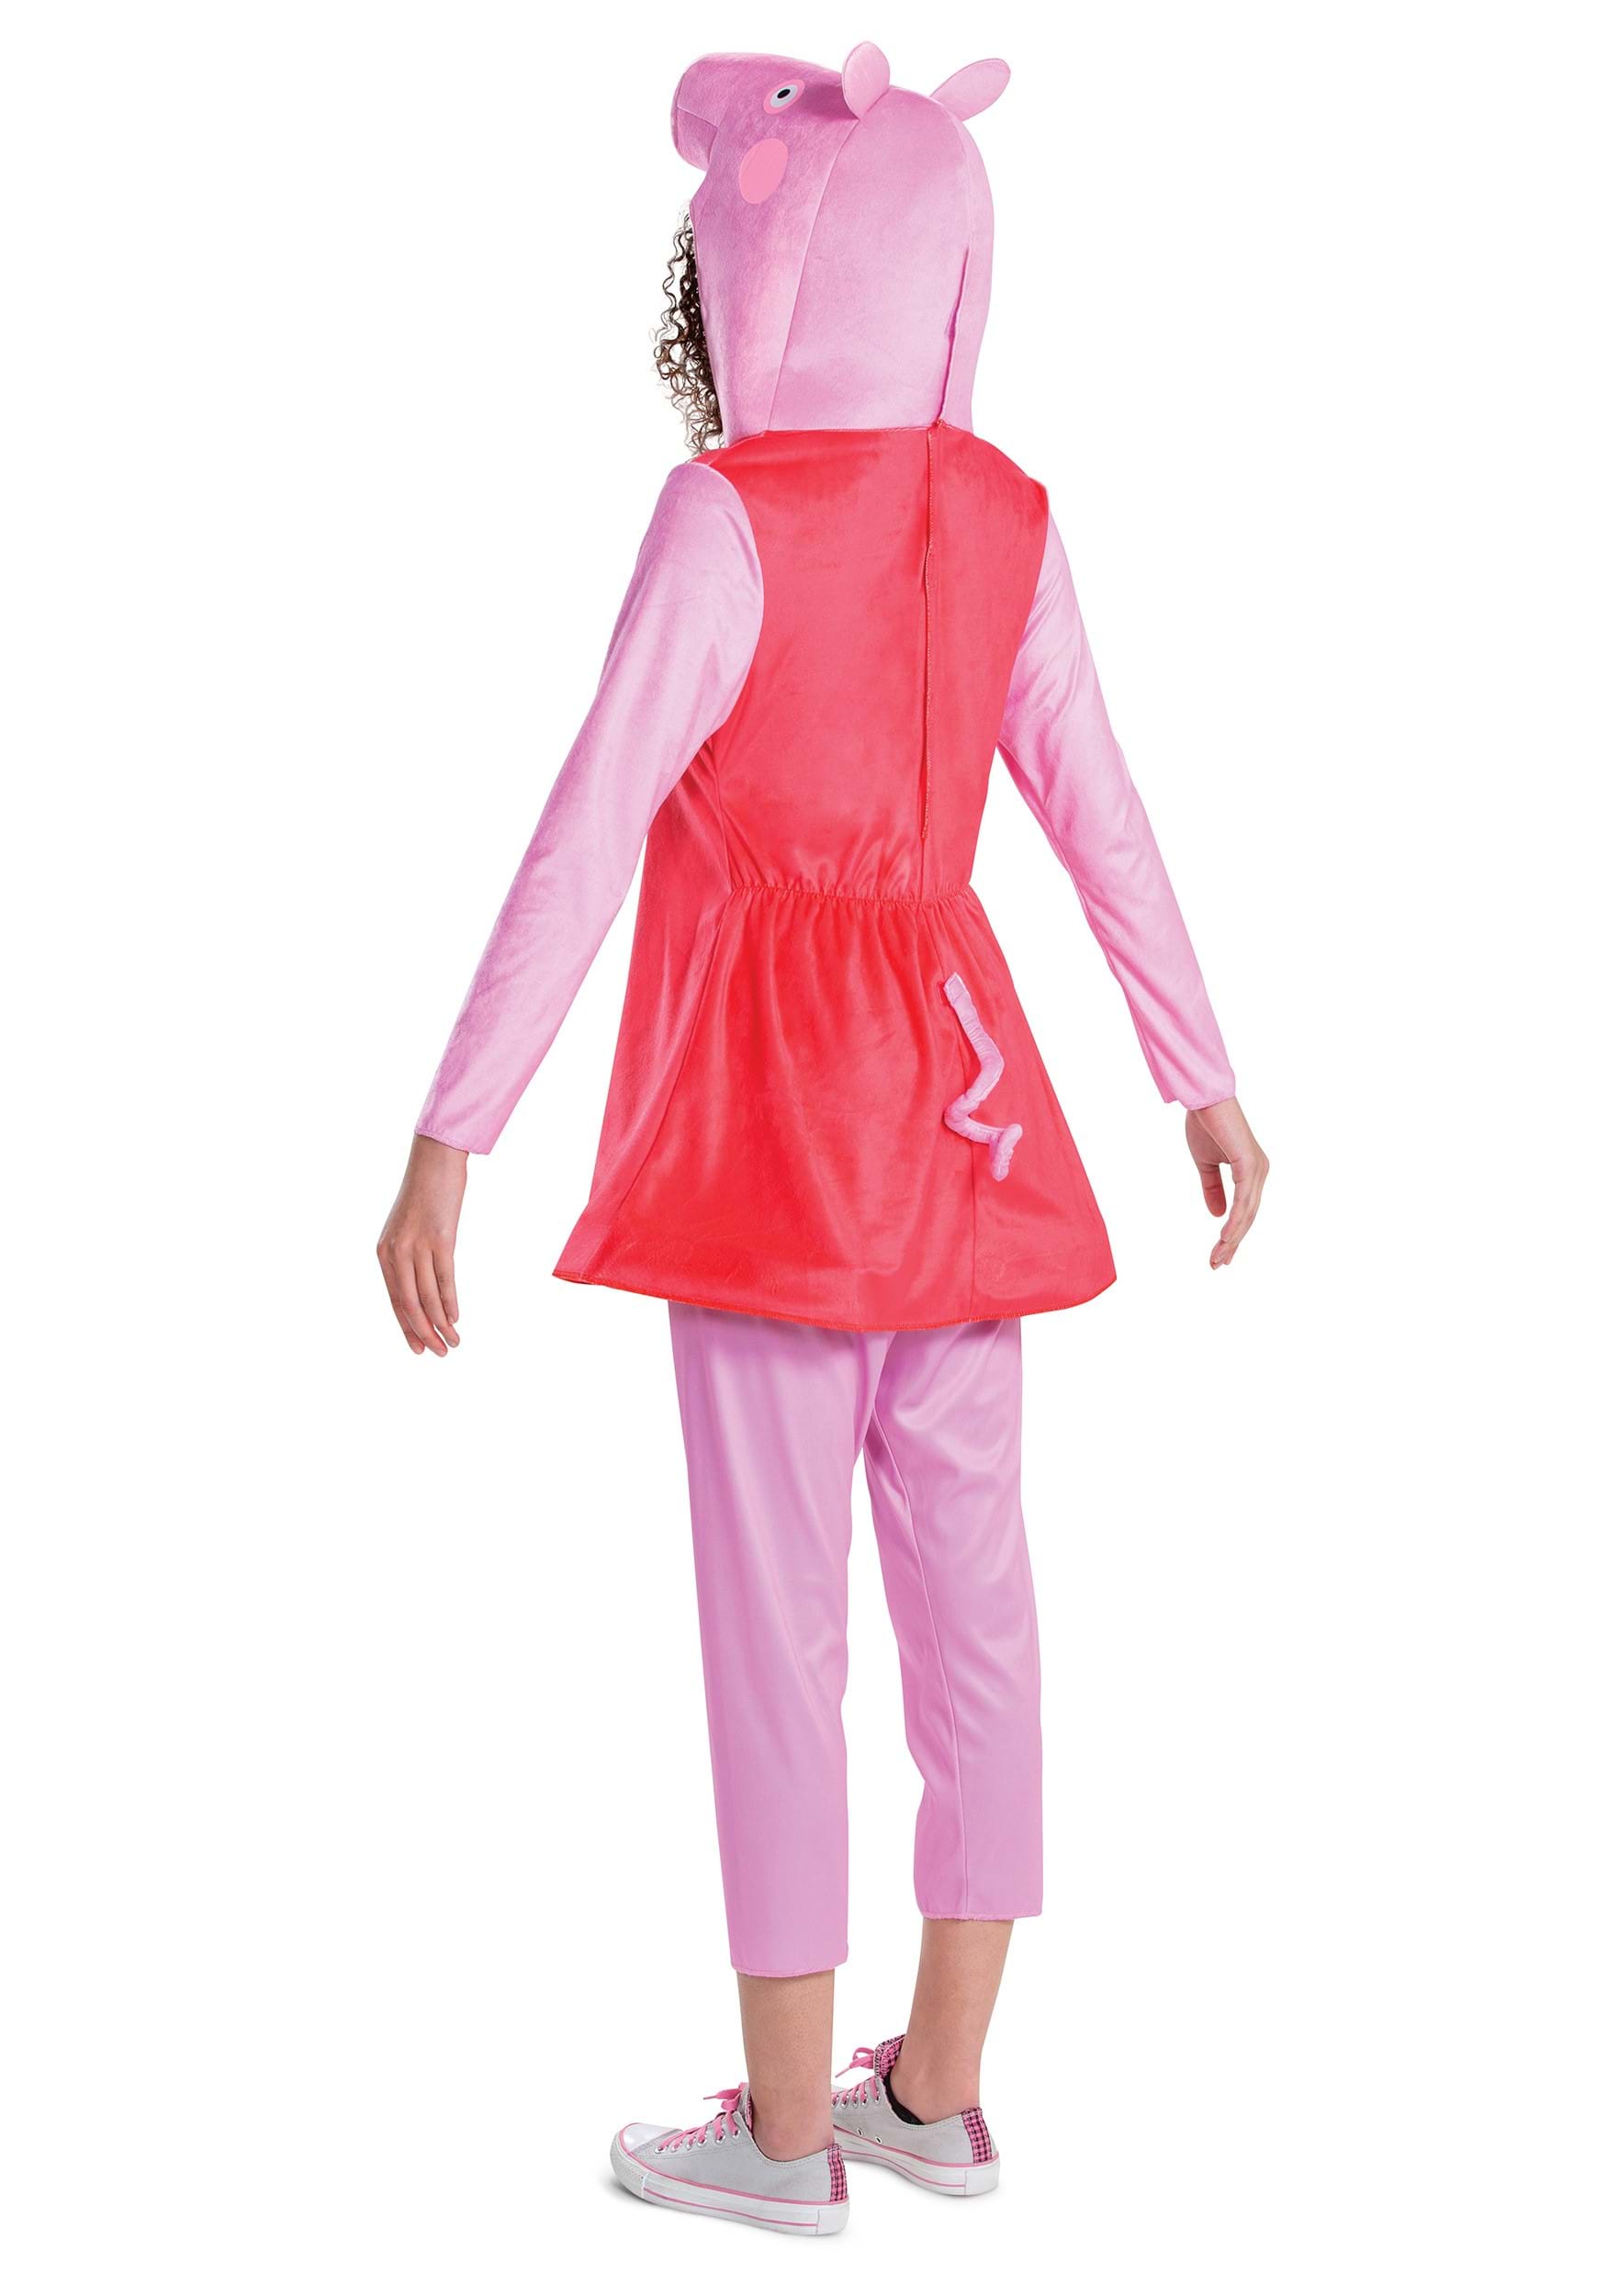 Women's Peppa Pig Adult Deluxe Fancy Dress Costume